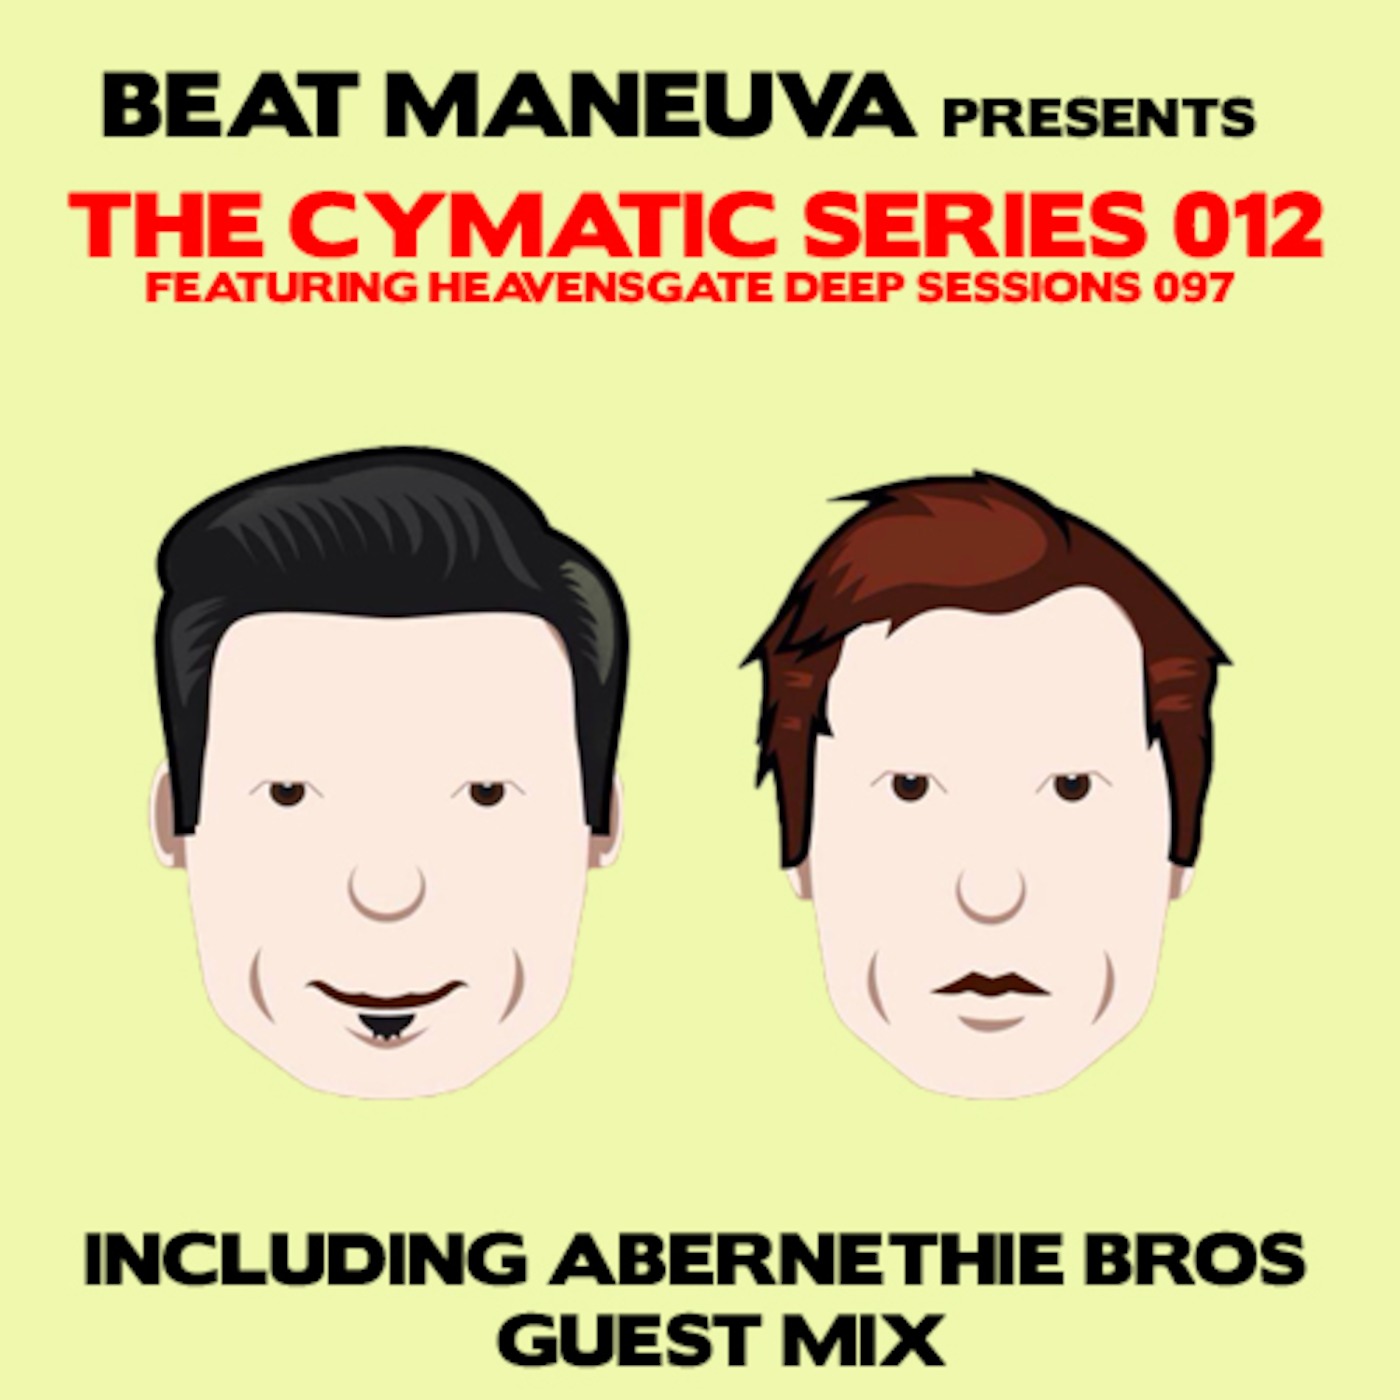 Beat Maneuva - The Cymatic Series 012 + Abernethie Bros Guest Mix